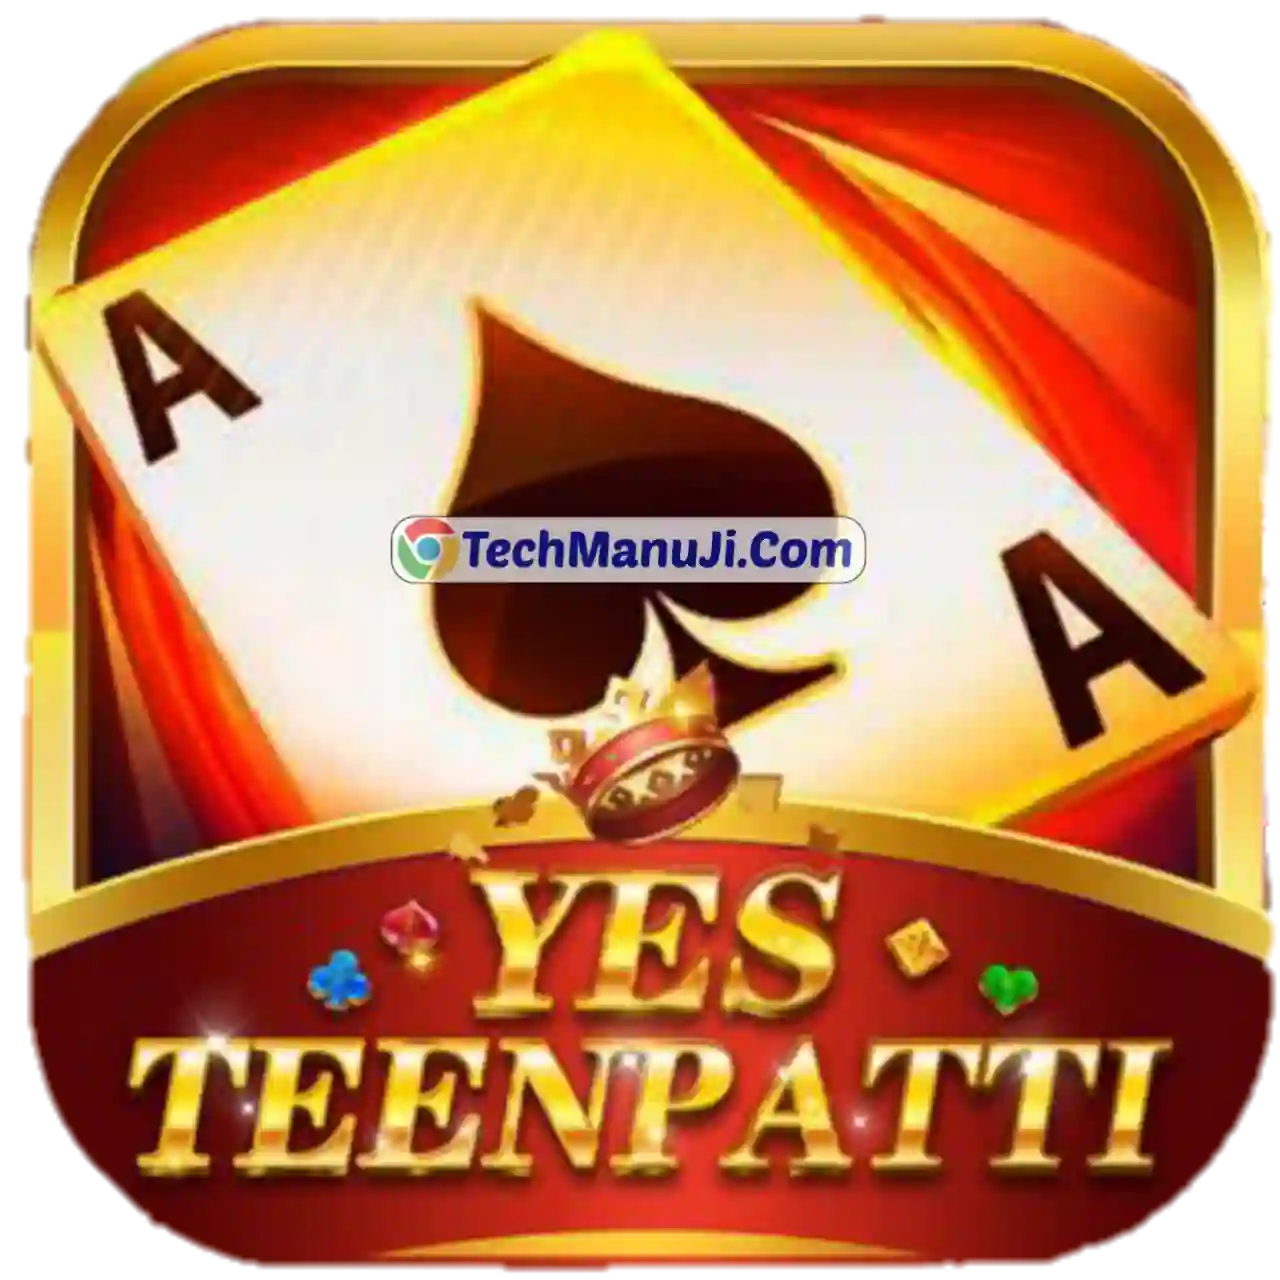 Teen Patti Yes Mod Apk Download - Rummy Apk App List